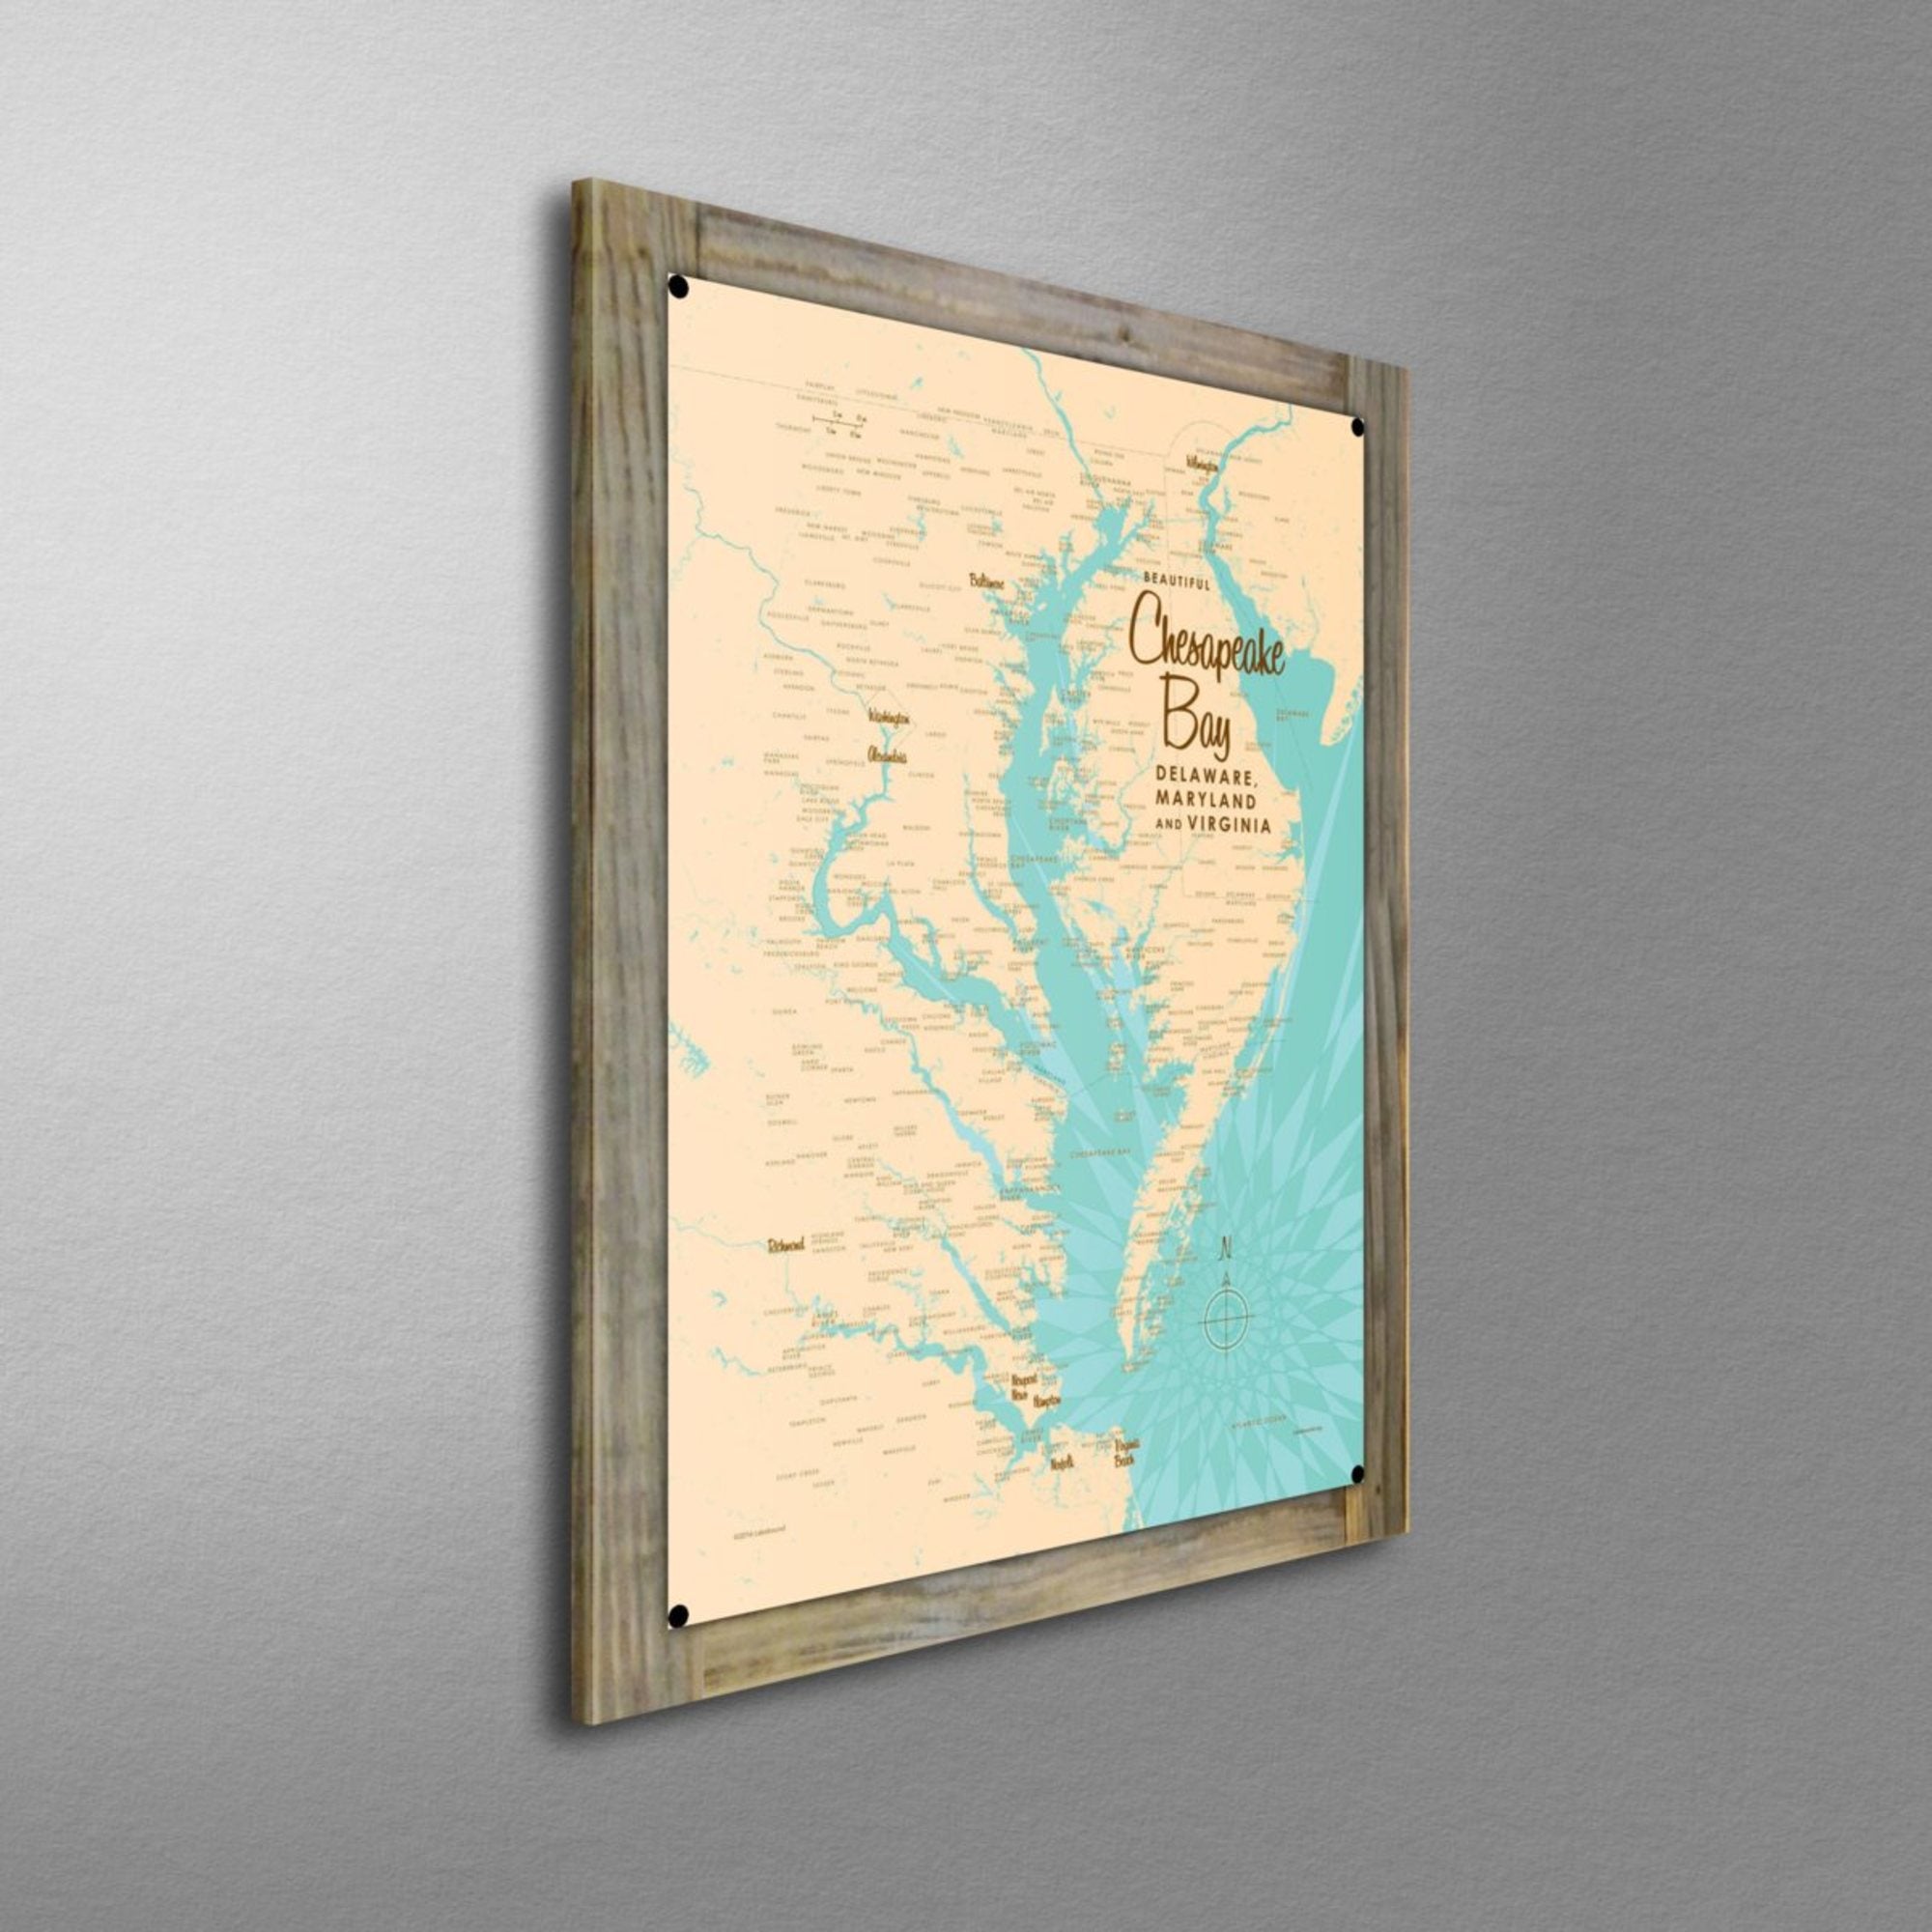 Chesapeake Bay Maryland Virginia, Wood-Mounted Metal Sign Map Art